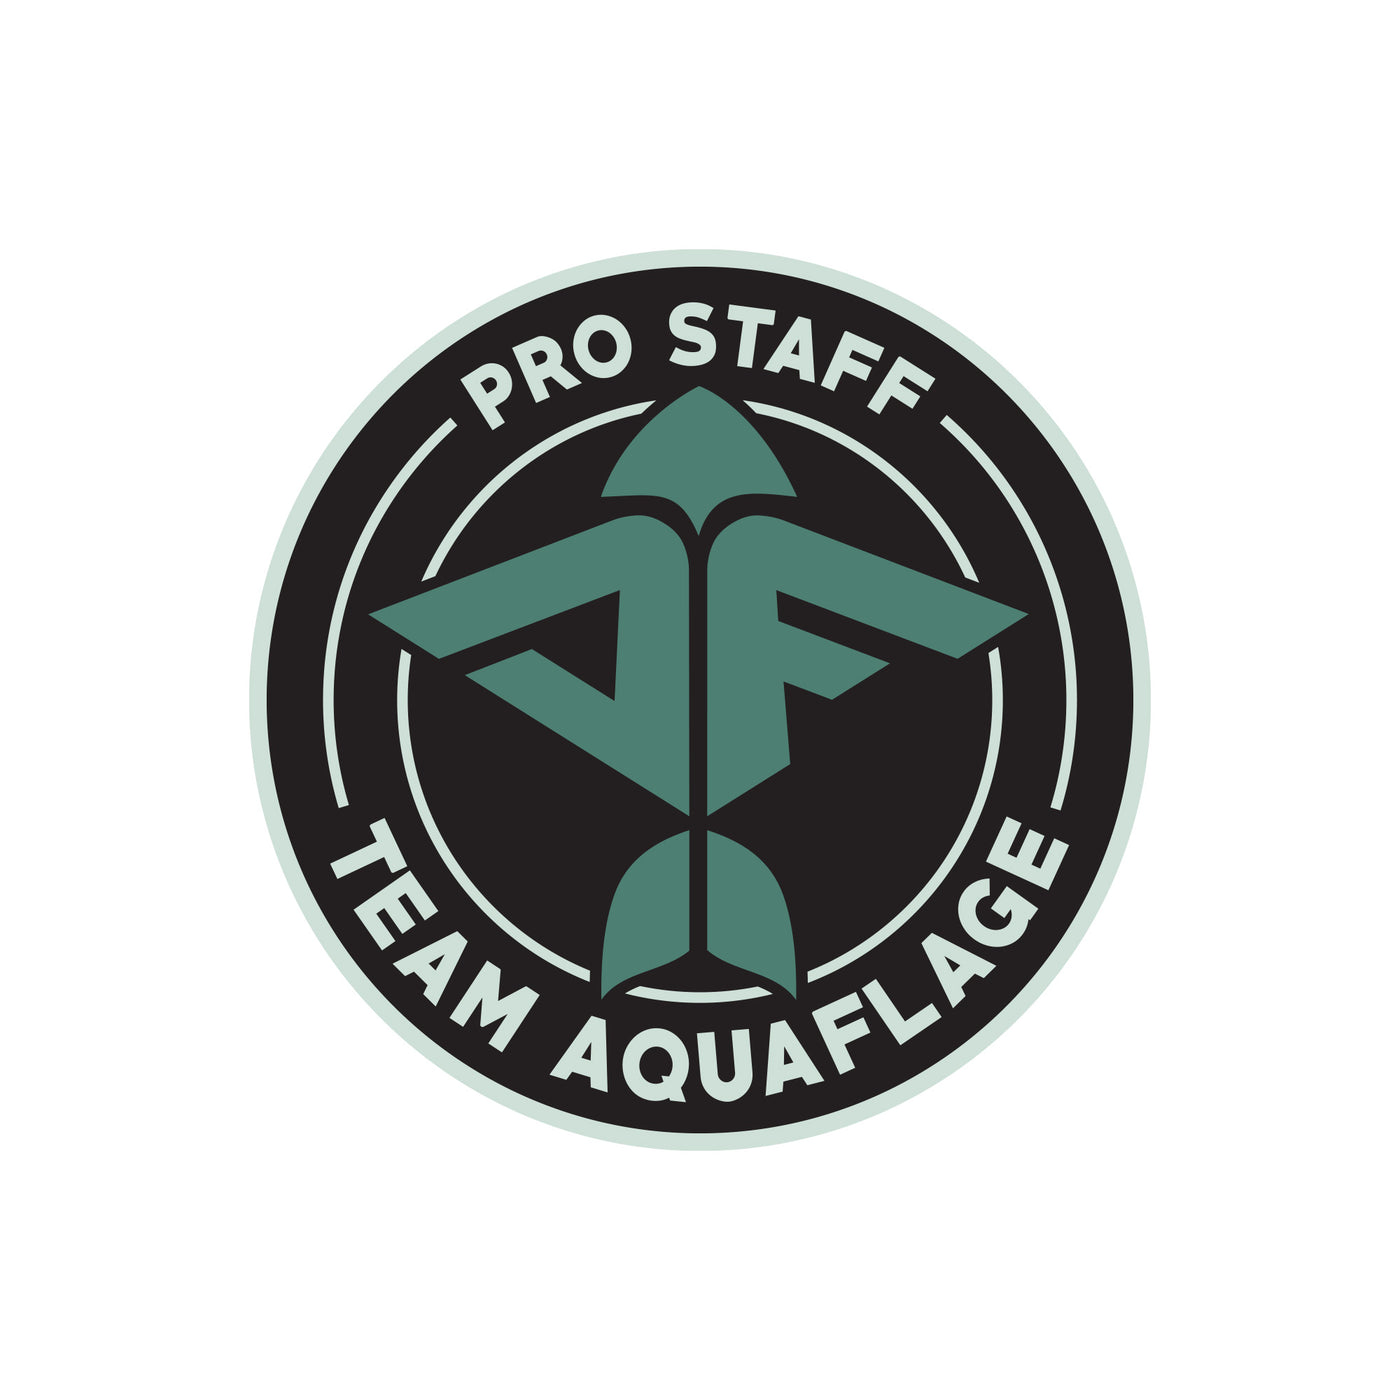 Aquaflage Pro Staff Patch